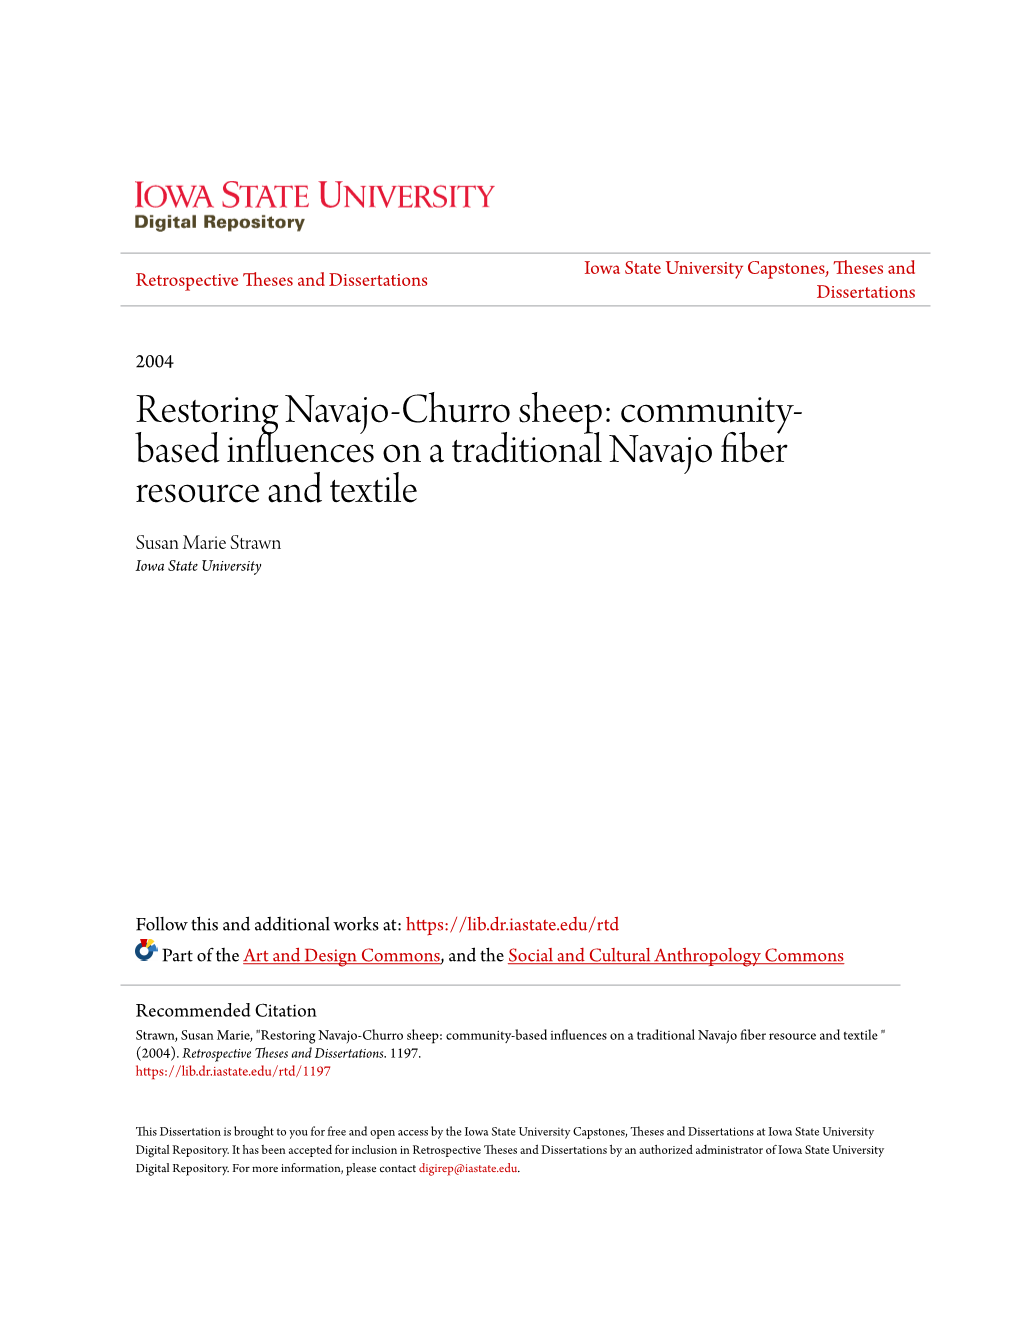 Restoring Navajo-Churro Sheep: Community-Based Influences on a Traditional Navajo Fiber Resource and Textile " (2004)